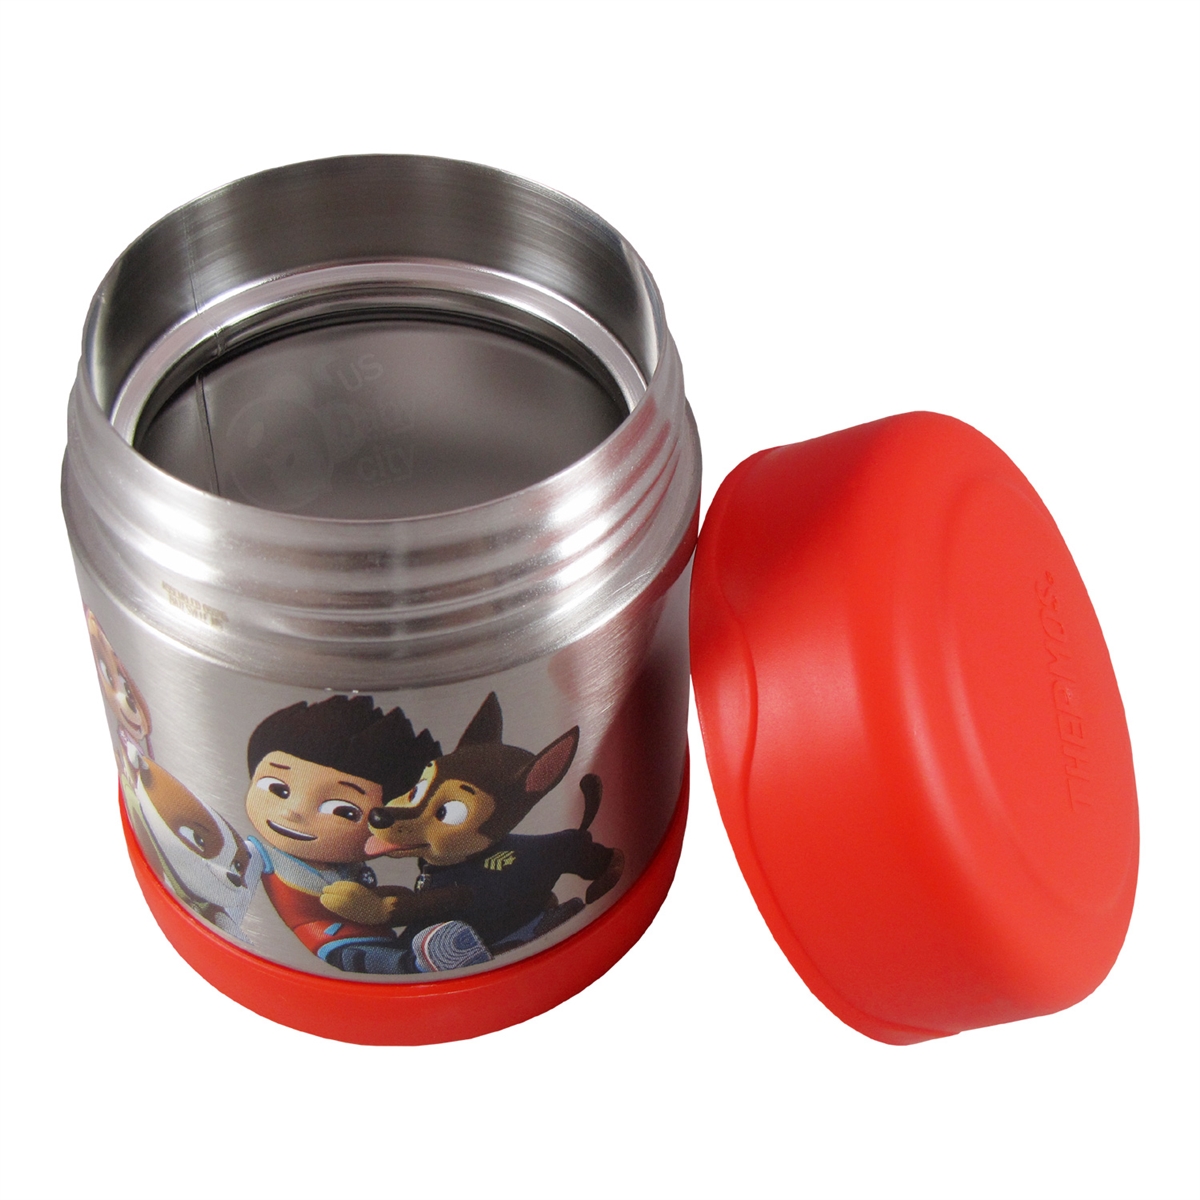 Thermos 10 oz Funtainer Food Jar, Paw Patrol - Parents' Favorite